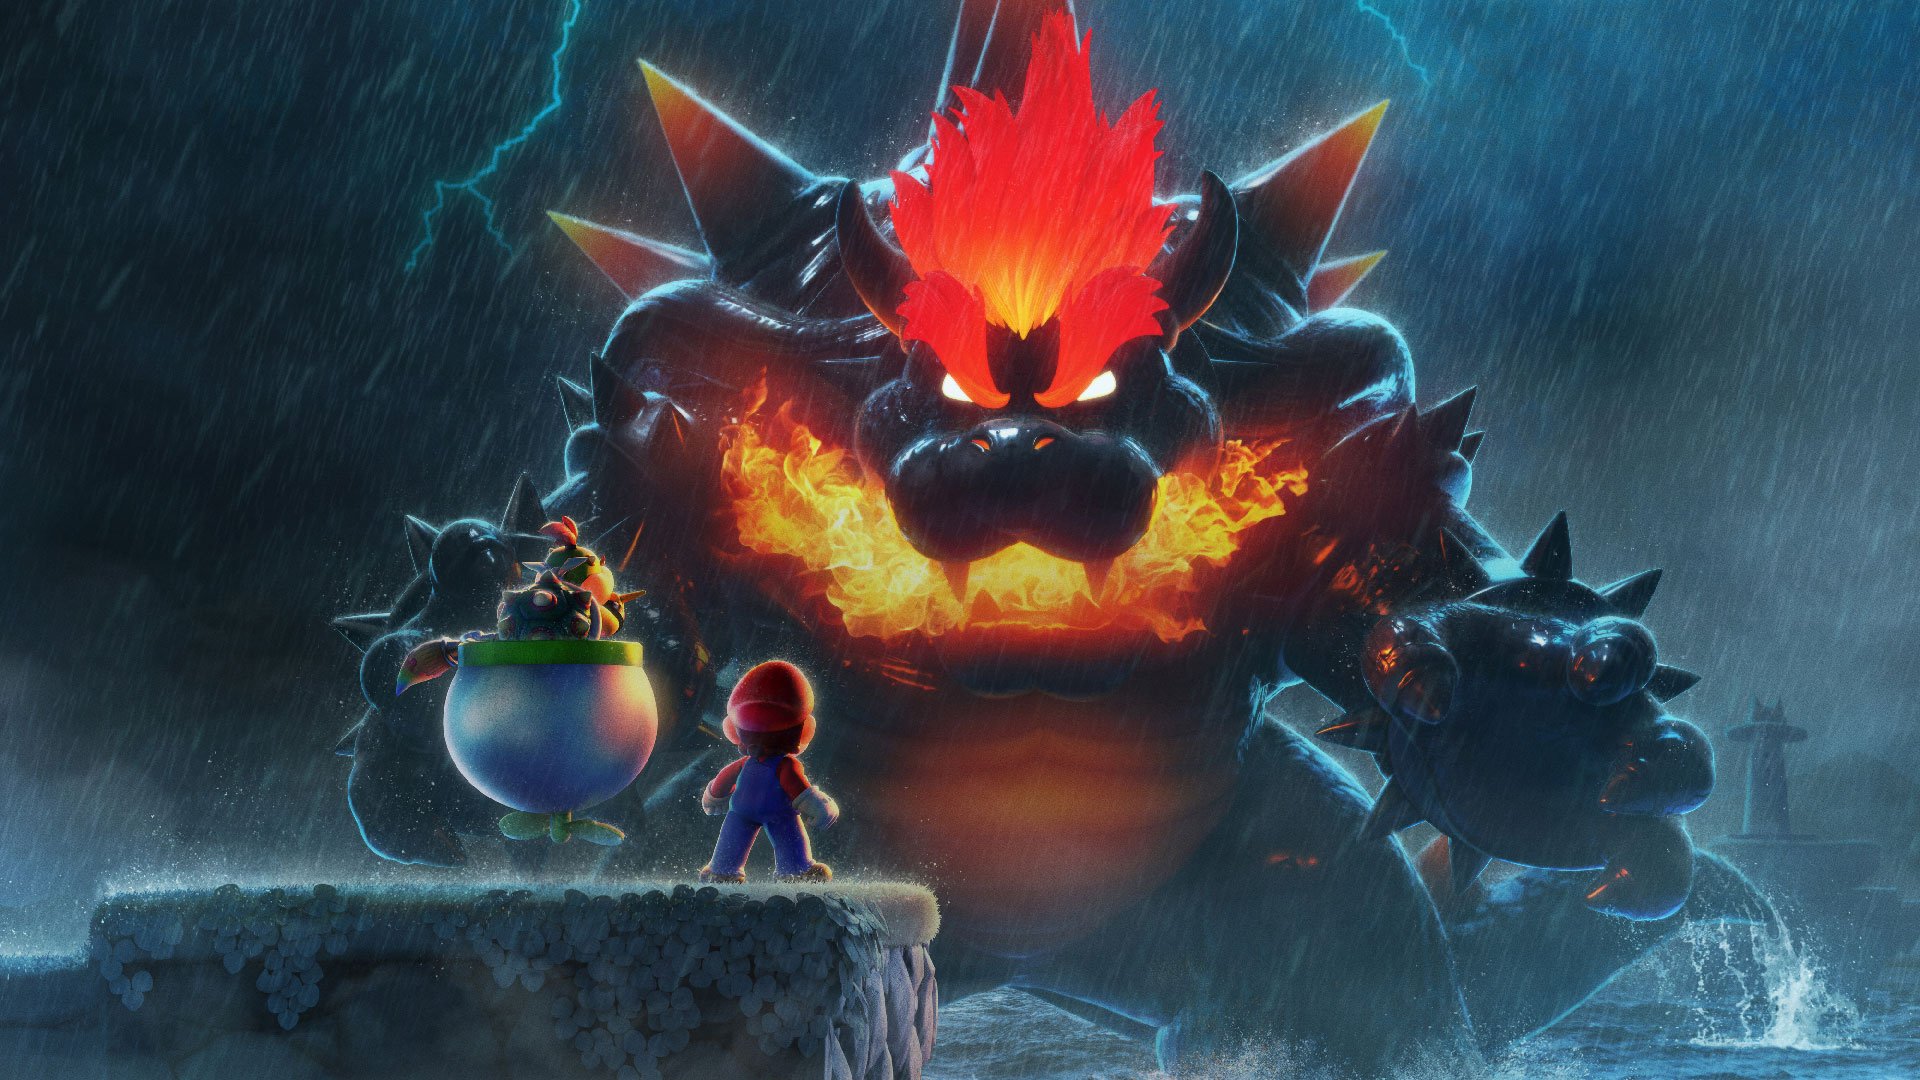 Super Mario 3D World Reveals Bowser's Fury - CGMagazine